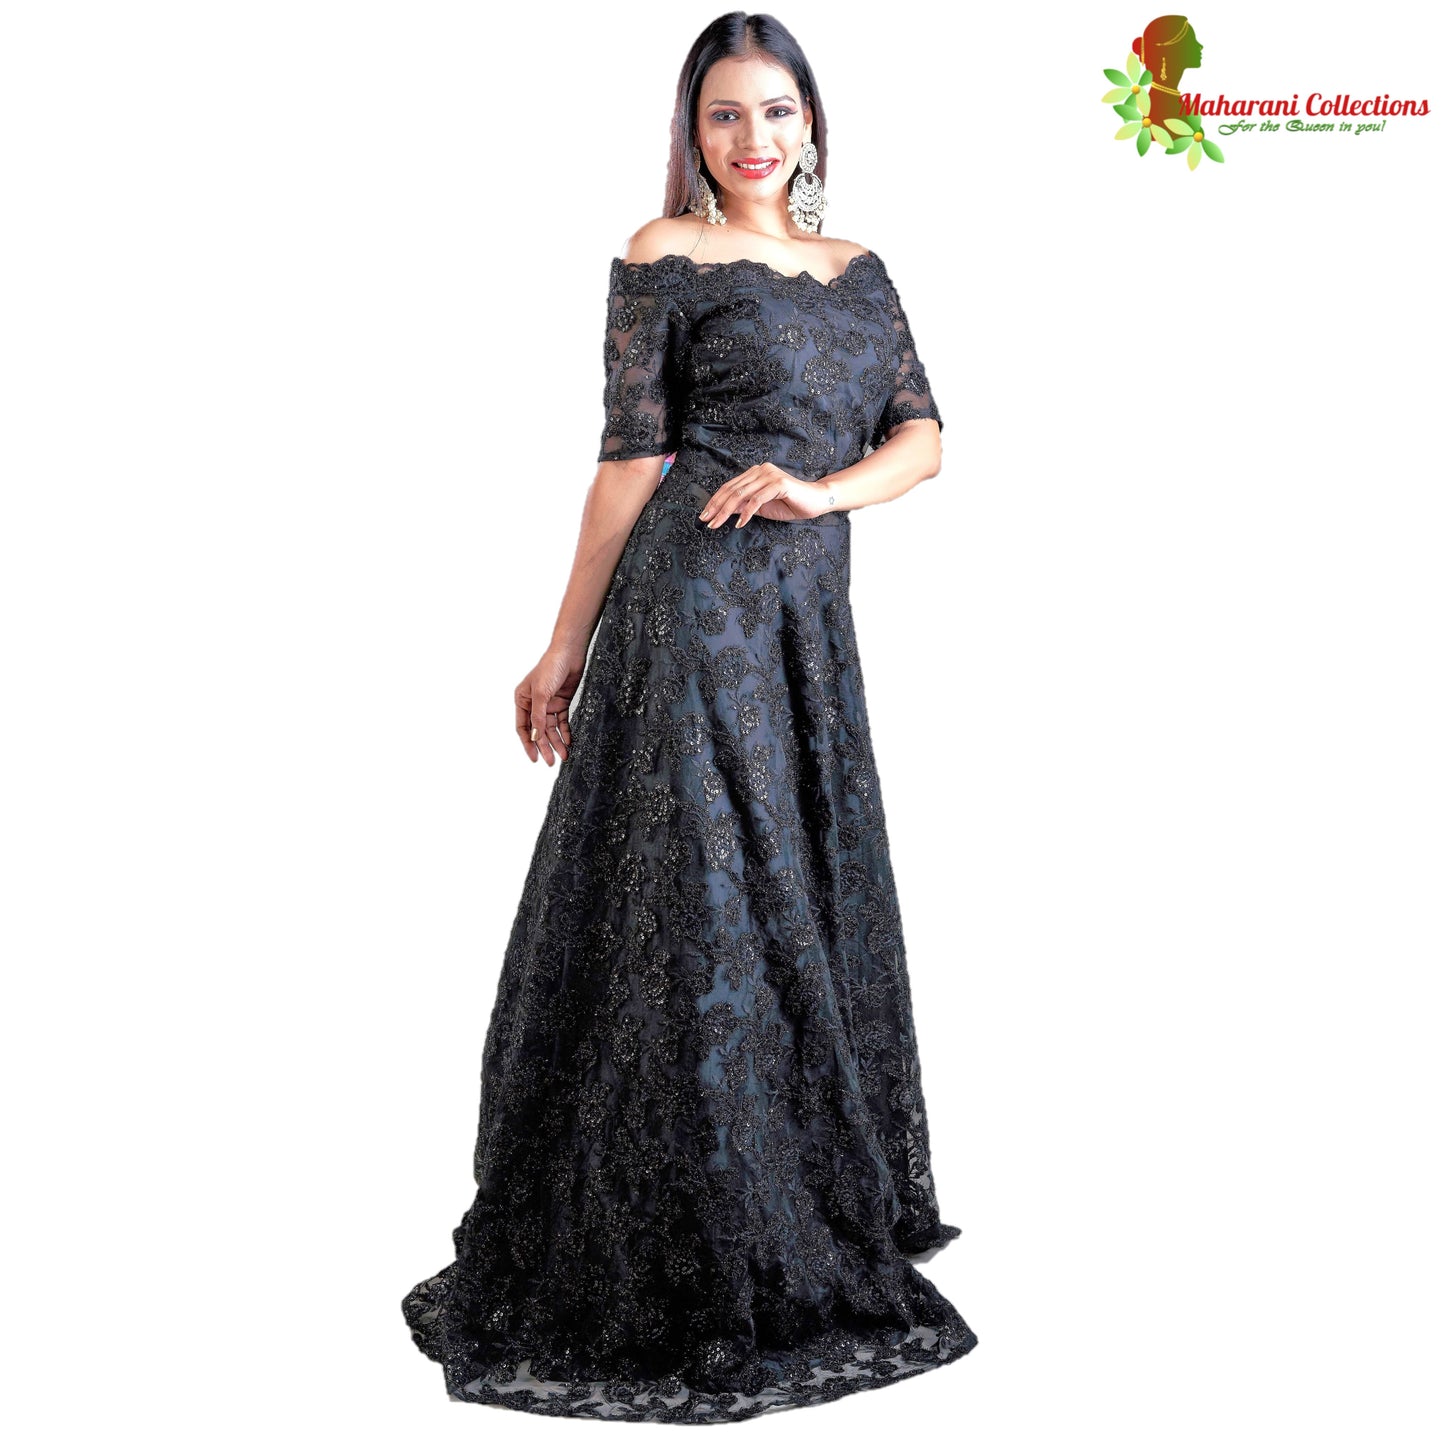 Designer Ball (Princess) Gown - Black with Zari, Sequins, Thread and Net Work